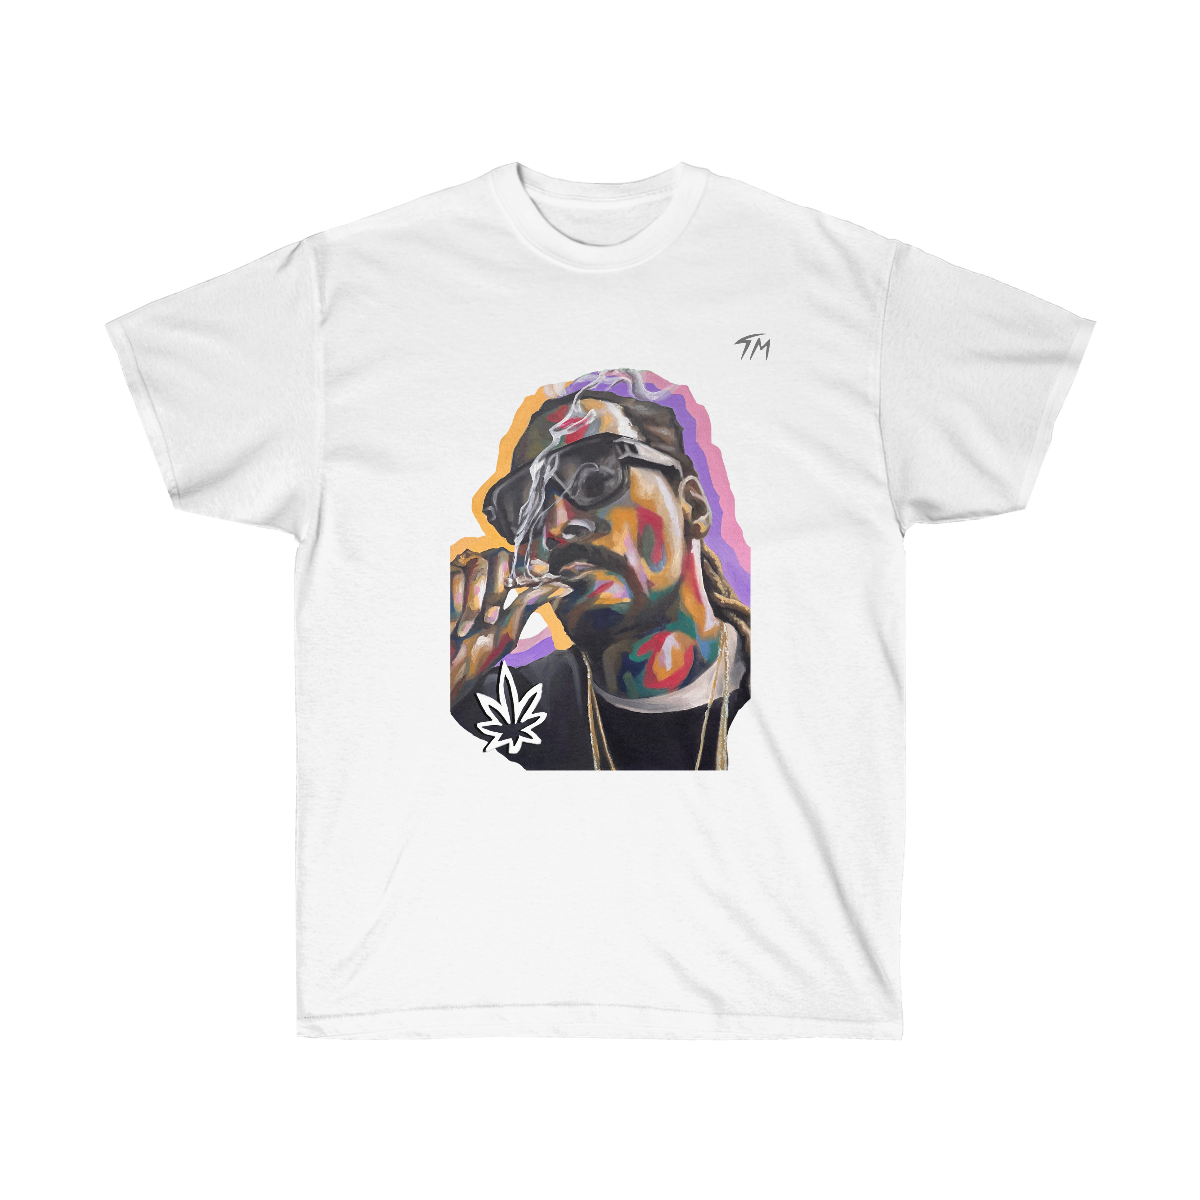 Snoop Dogg - T-Shirt - Tommy Manning Art